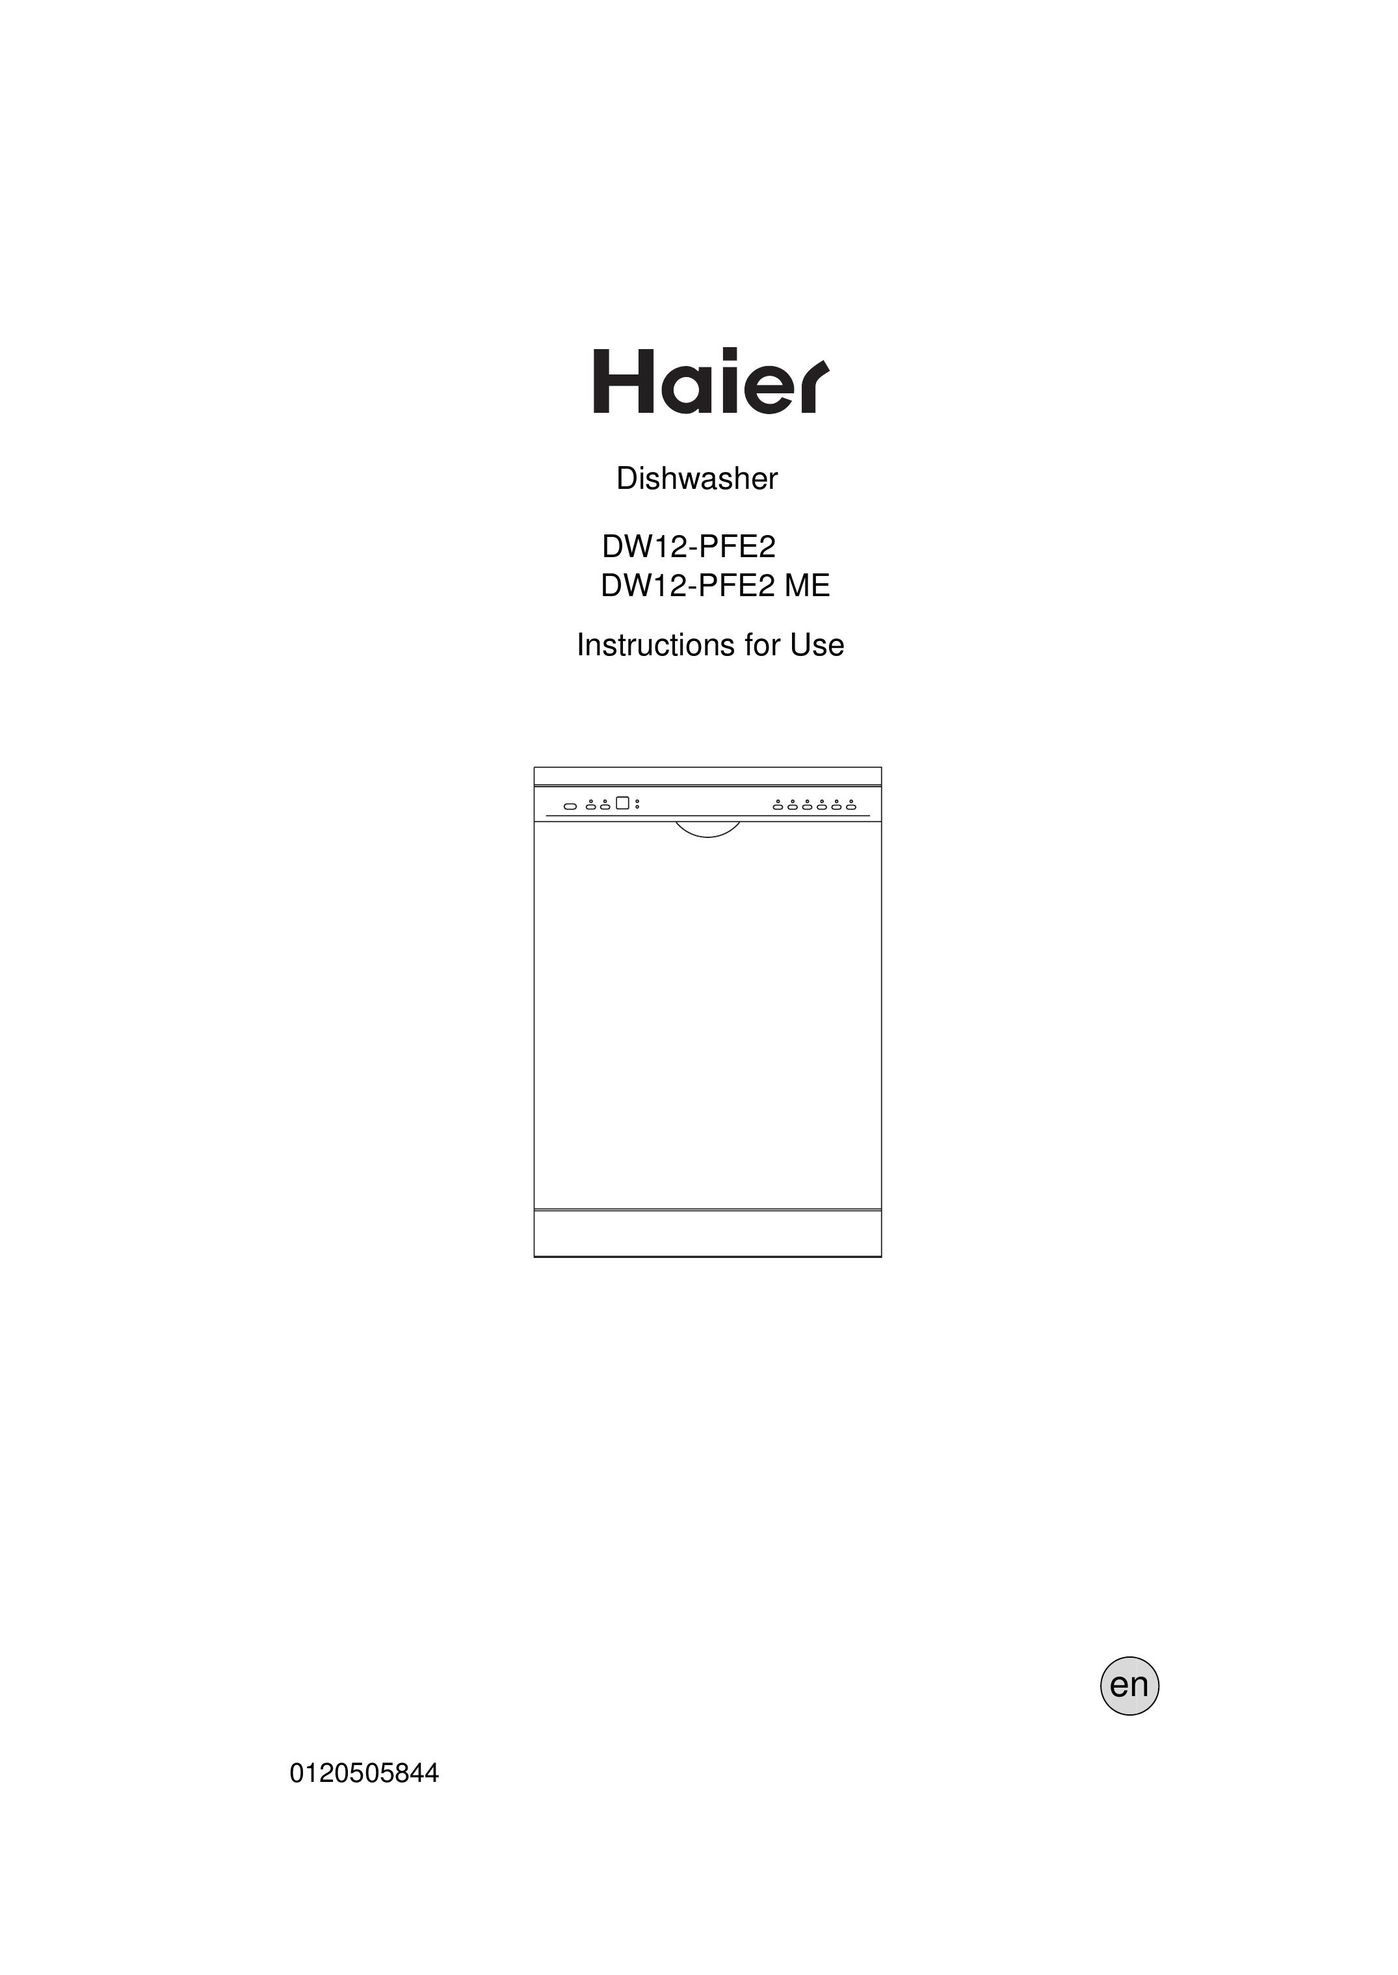 Haier DW12-PFE2 Dishwasher User Manual